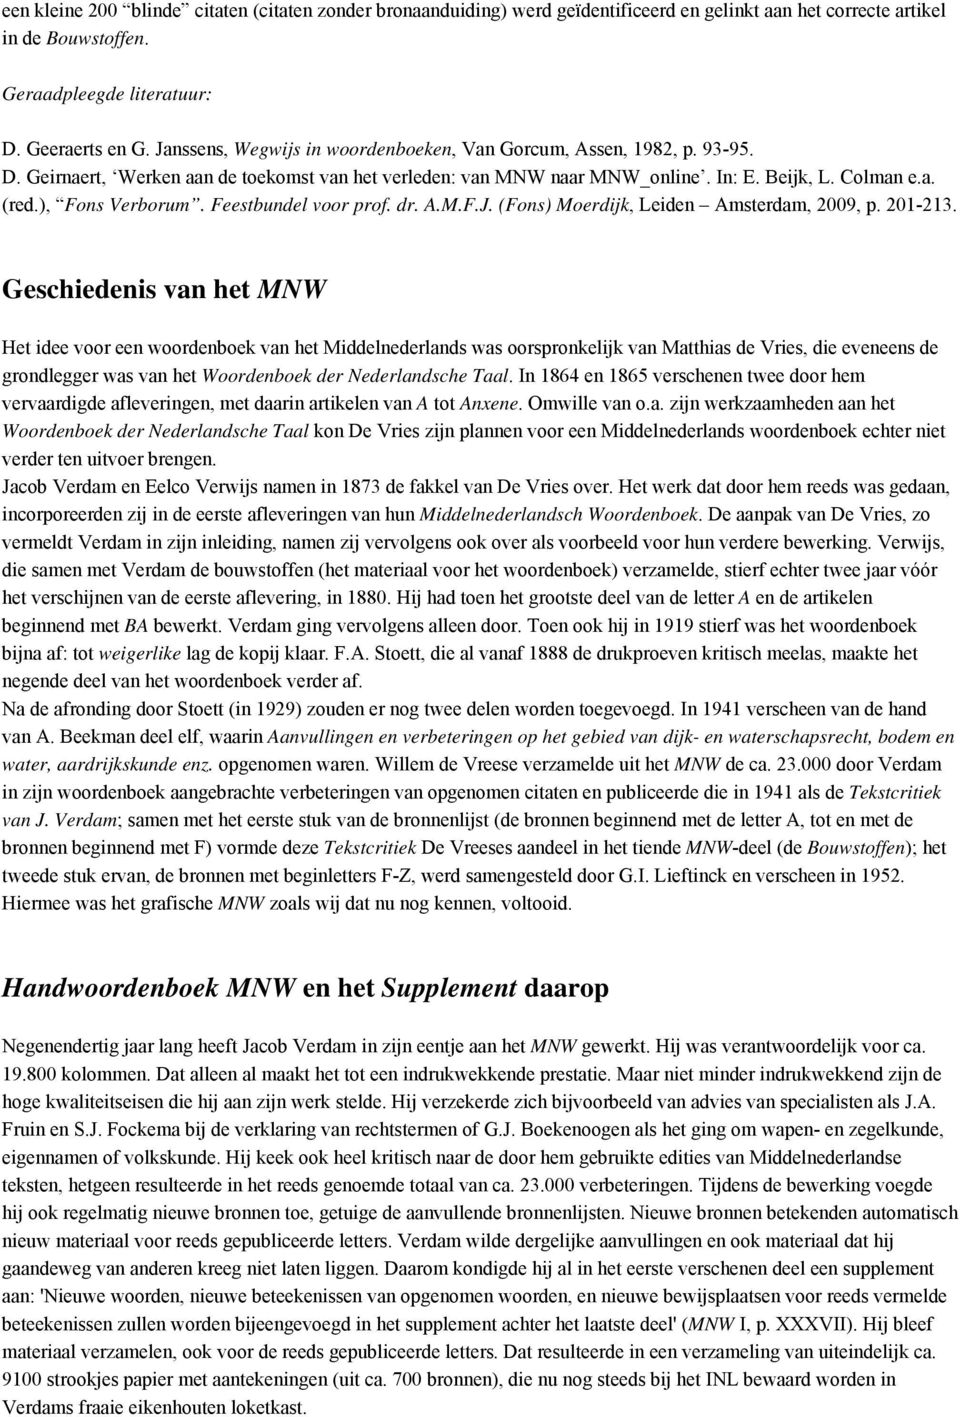 ), Fons Verborum. Feestbundel voor prof. dr. A.M.F.J. (Fons) Moerdijk, Leiden Amsterdam, 2009, p. 201-213.